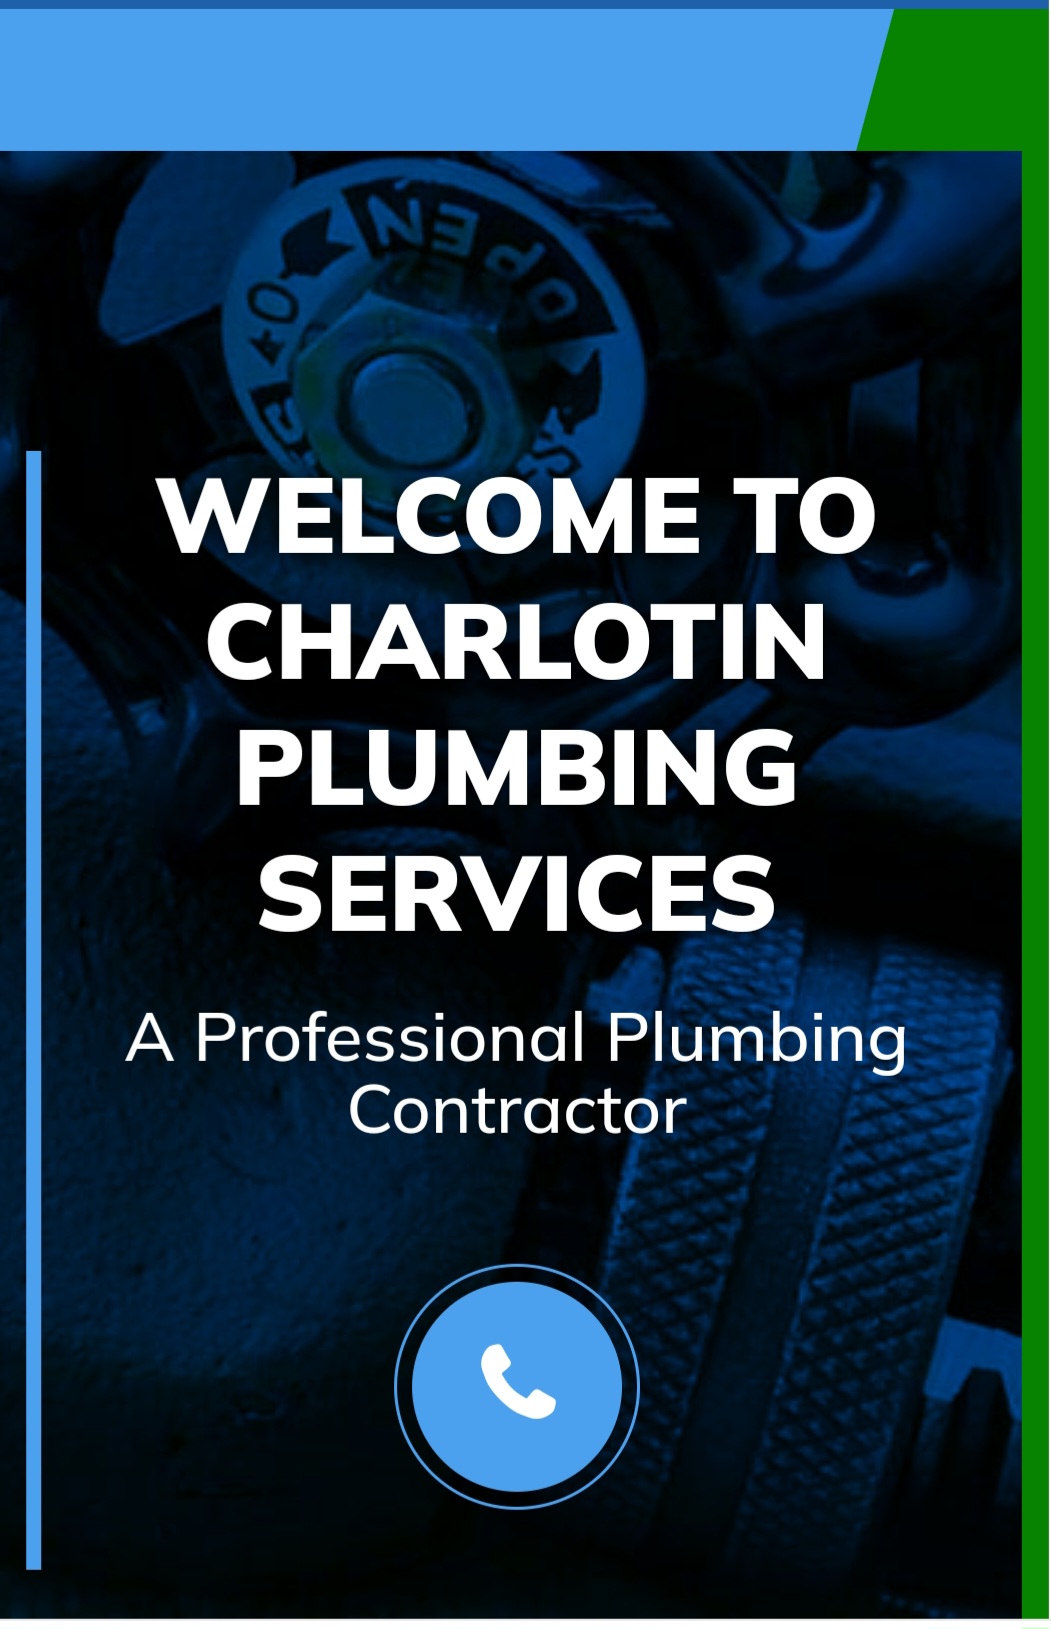 Charlotin Plumbing Services Logo